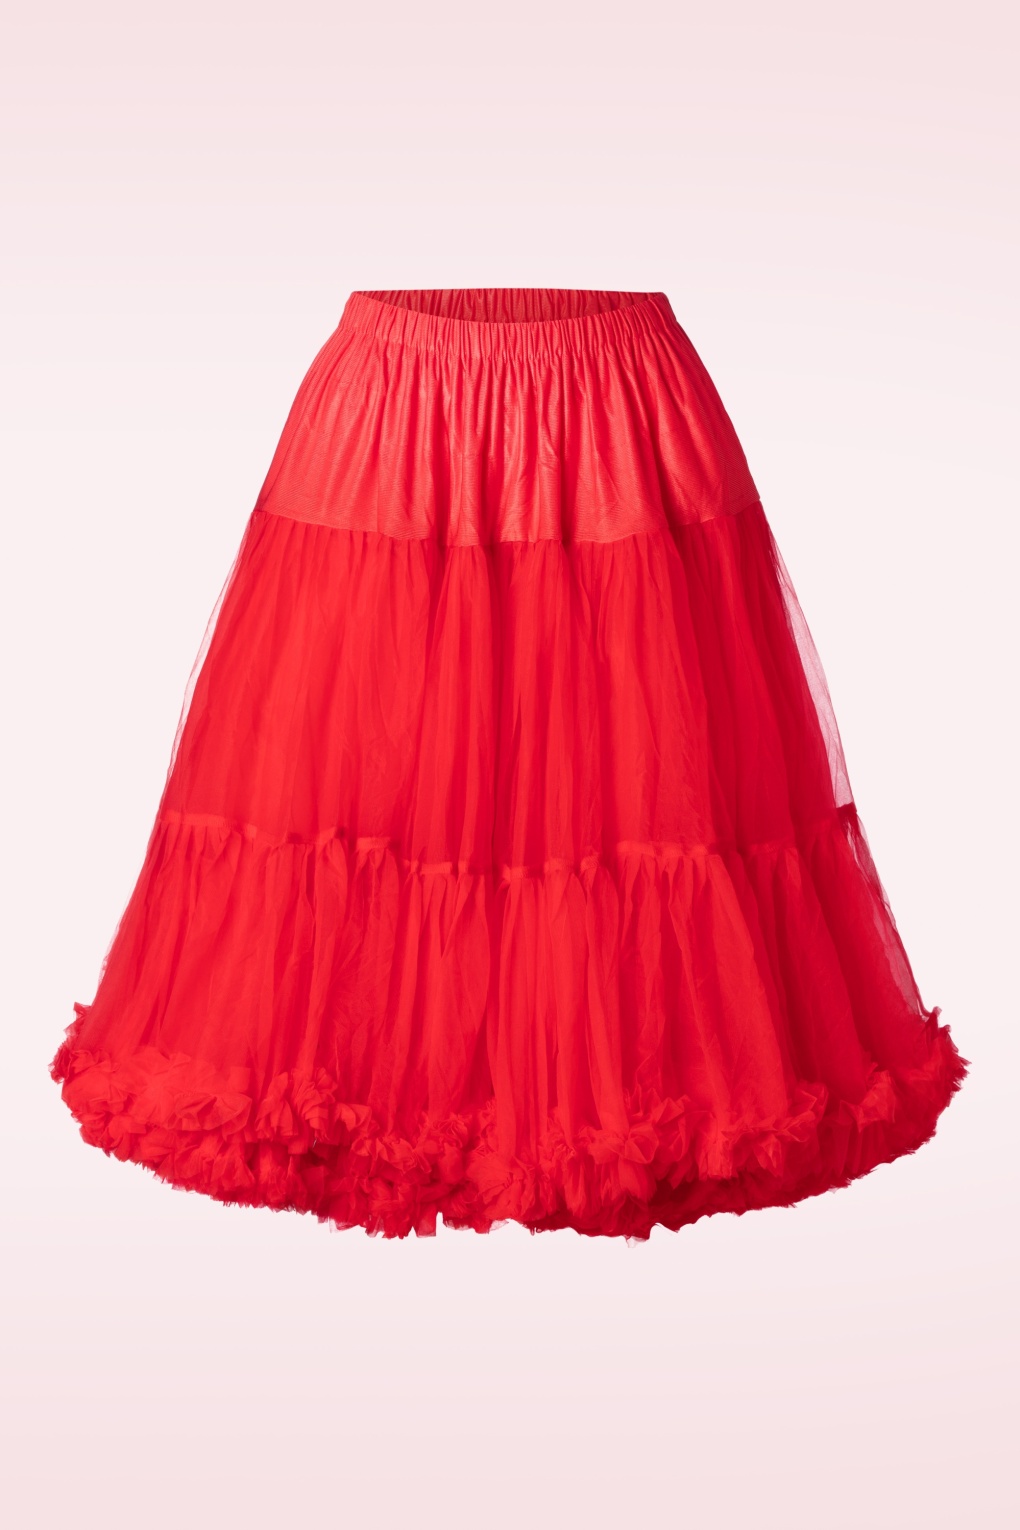 Queen Size Lola Lifeforms Petticoat in Rot von Banned Retro